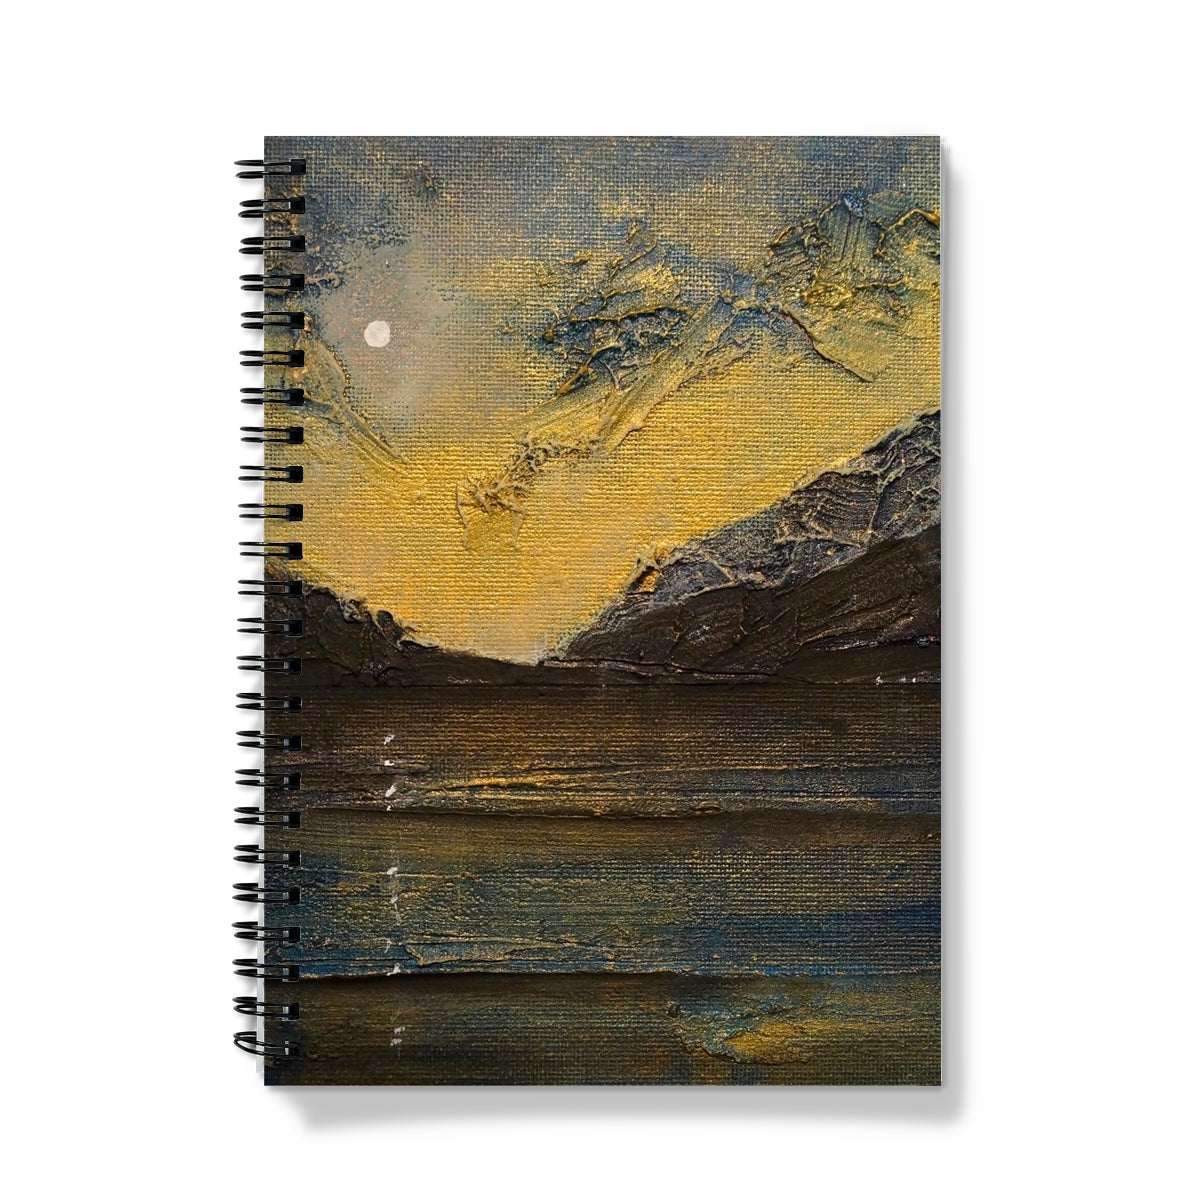 Loch Lomond Moonlight Art Gifts Notebook-Journals & Notebooks-Scottish Lochs & Mountains Art Gallery-A5-Graph-Paintings, Prints, Homeware, Art Gifts From Scotland By Scottish Artist Kevin Hunter